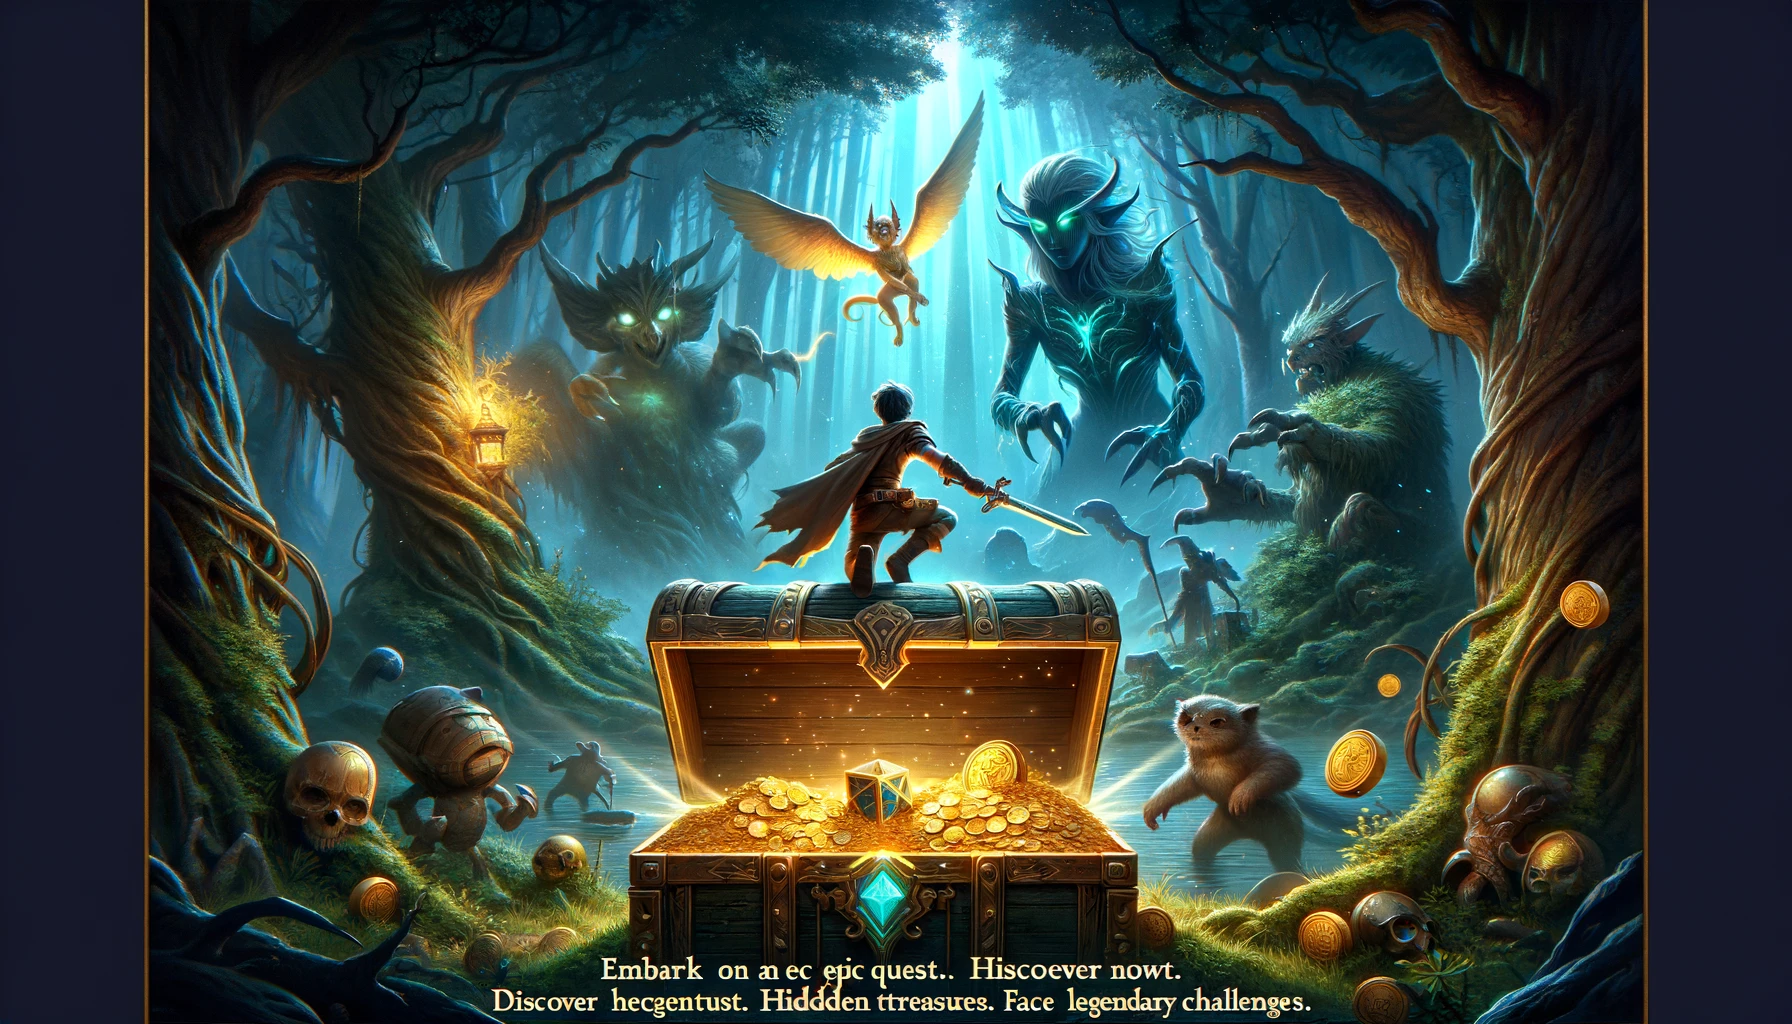 Game 2 Main Poster